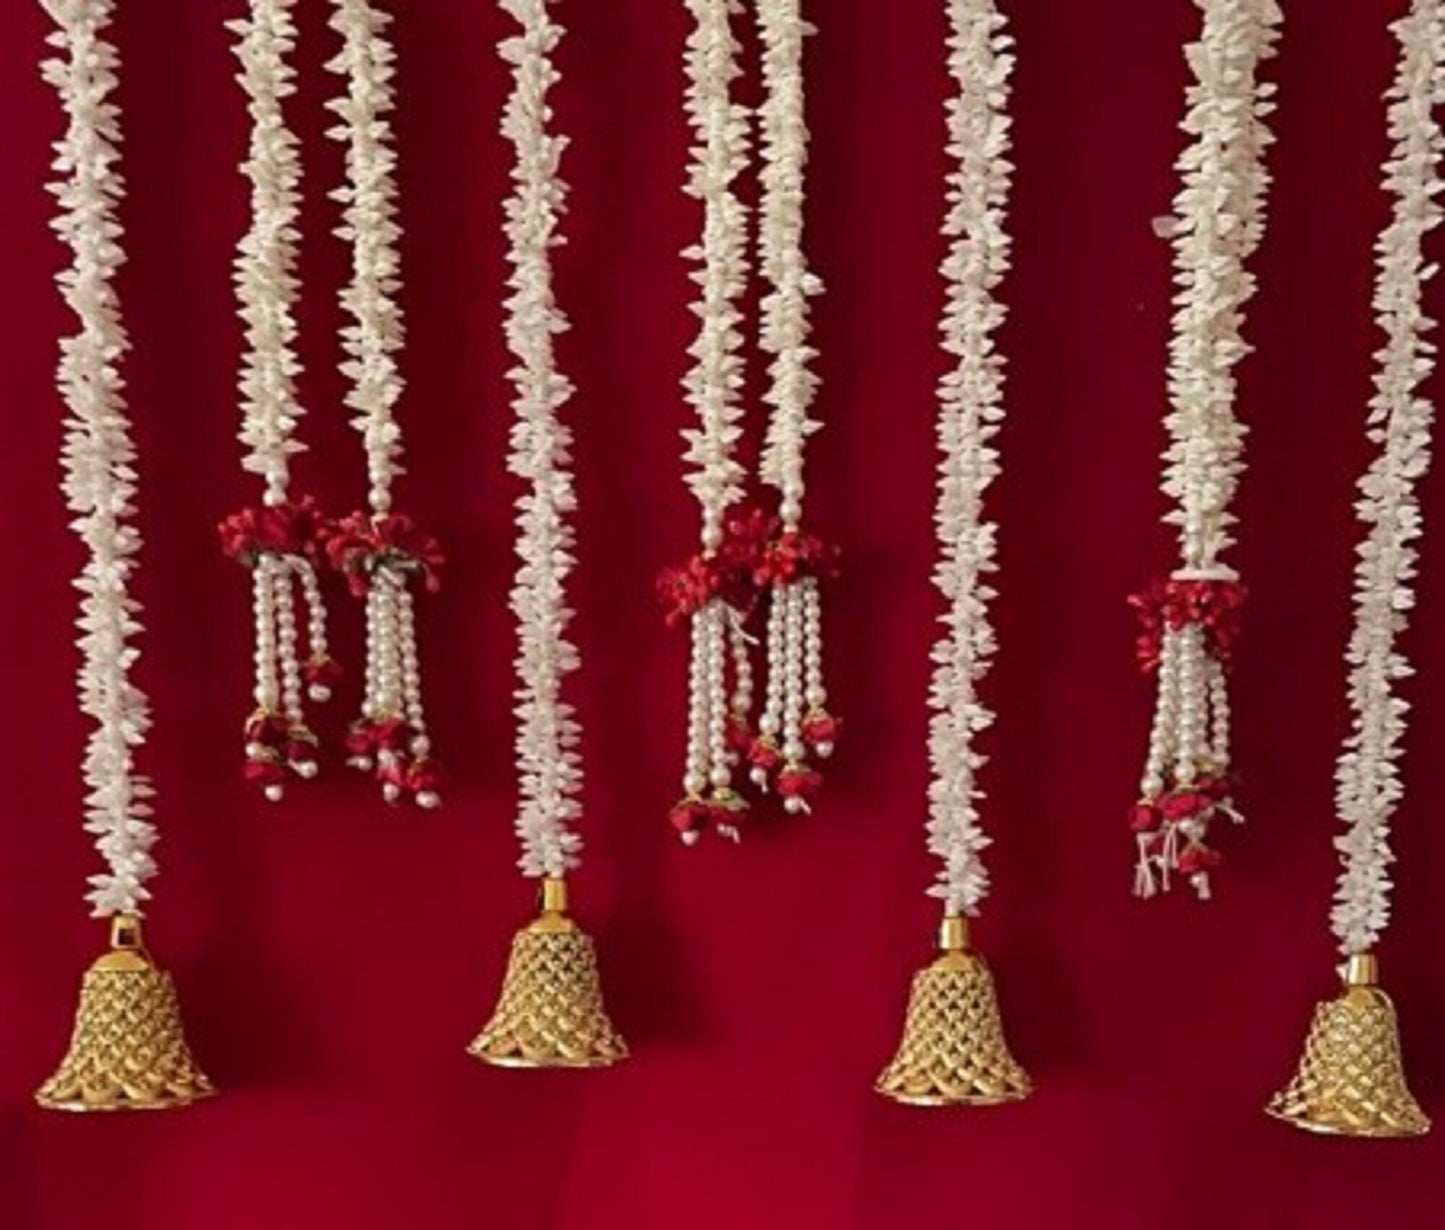 Pack of 6 Jasmine look Hanging Strings for Diwali, Mandir, Wedding, Mehndi, Garden Party Outdoor Backdrops Indian Wedding Home Decorating